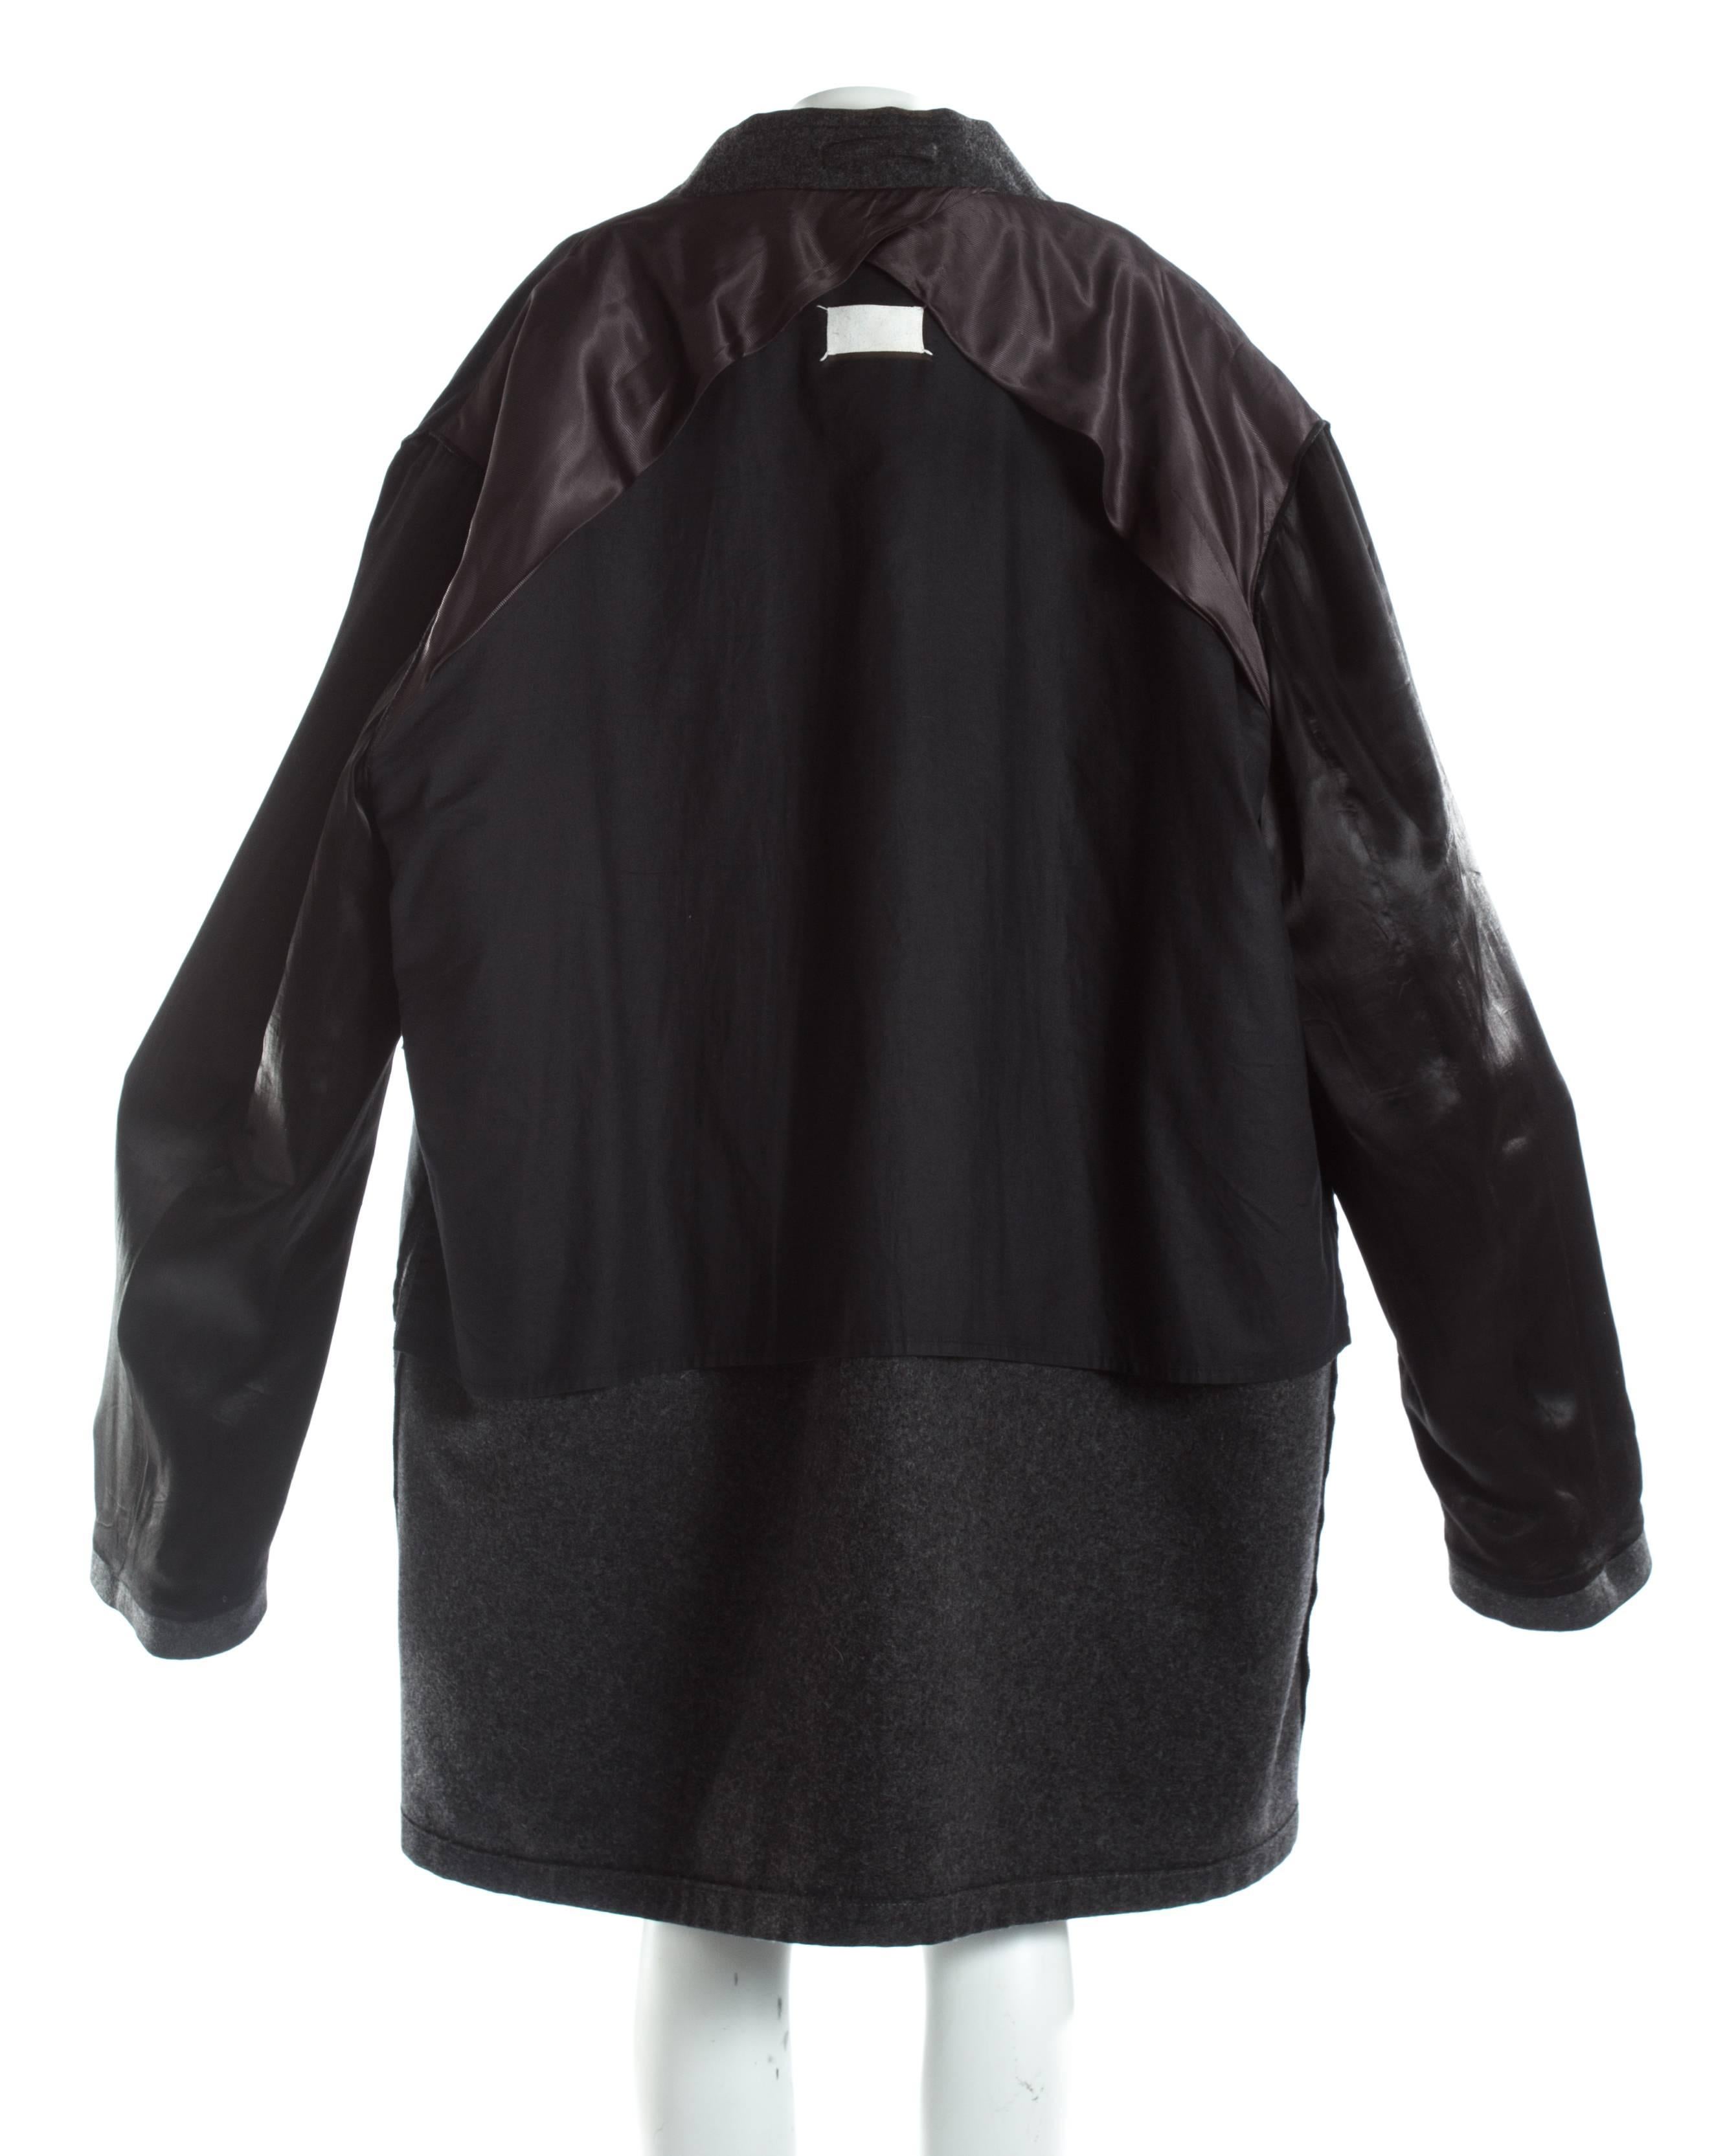 Margiela charcoal melton wool overcoat, A / W 2000 3